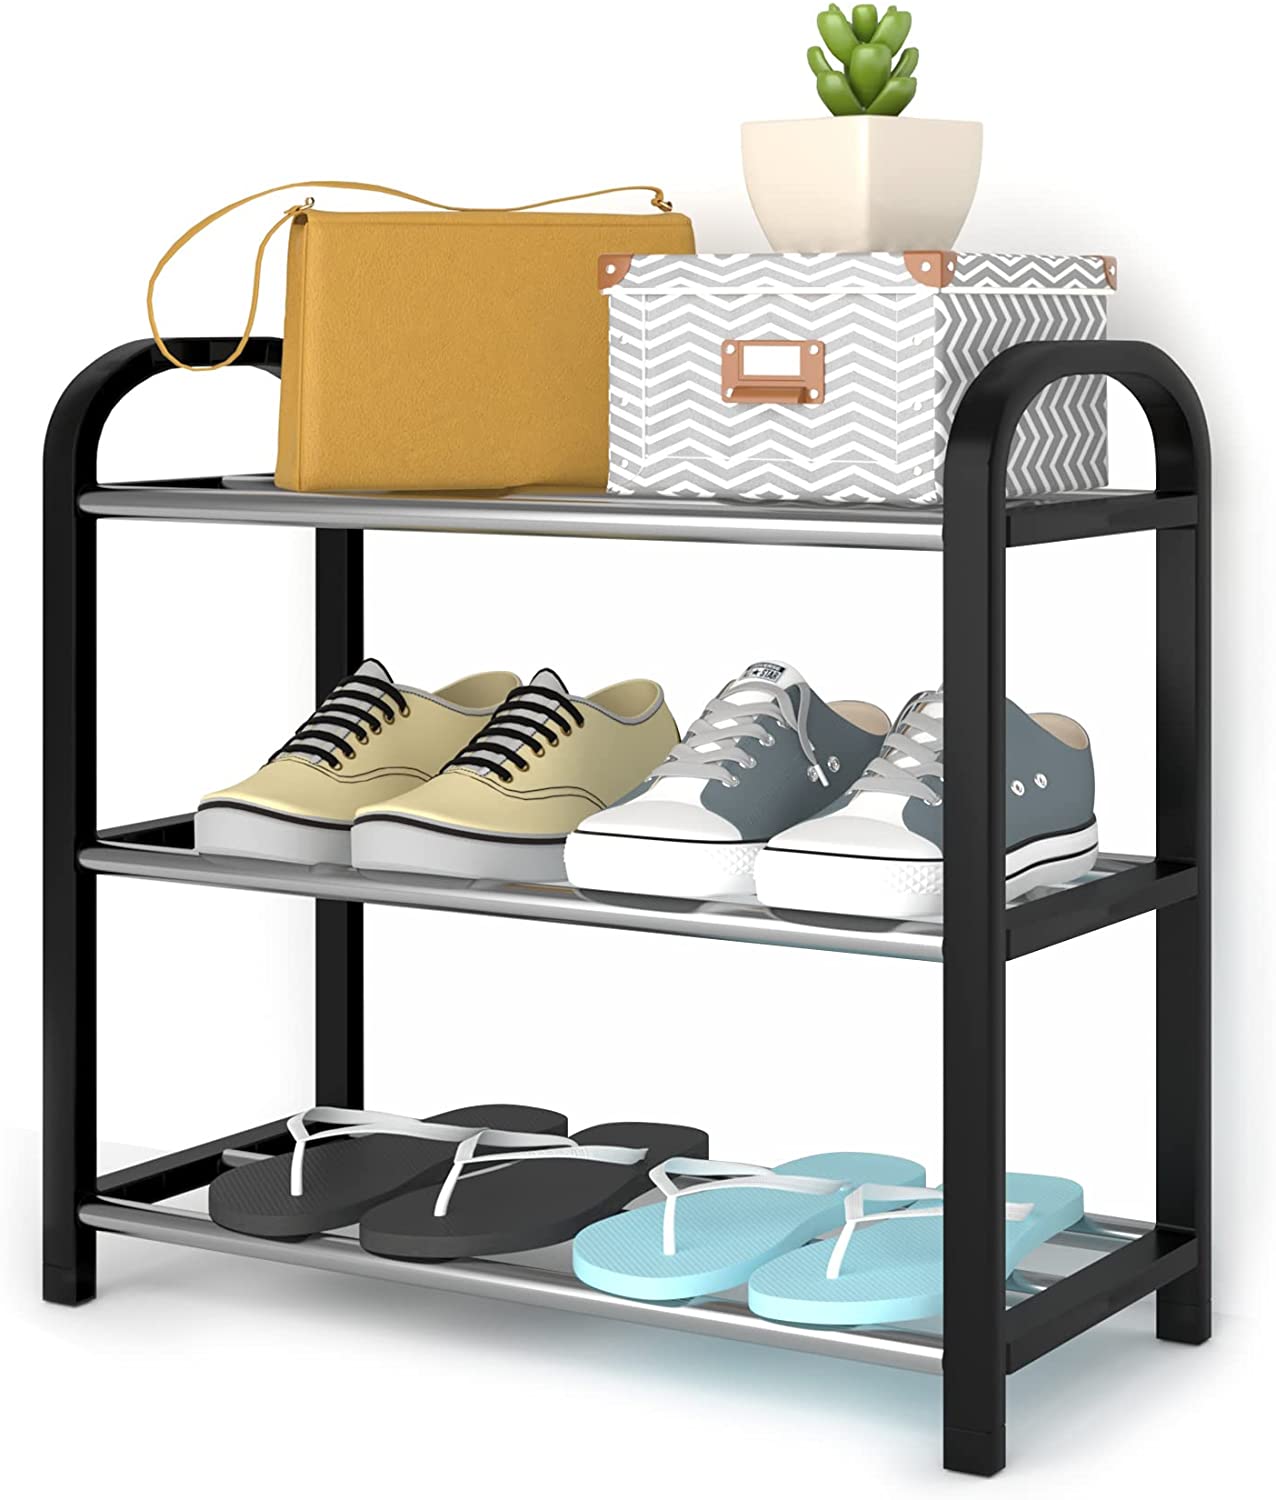 3-Tier Narrow Shoe Rack Storage Stackable Sturdy Metal Standing Vertical Shoe Shelf Organizer for Closet